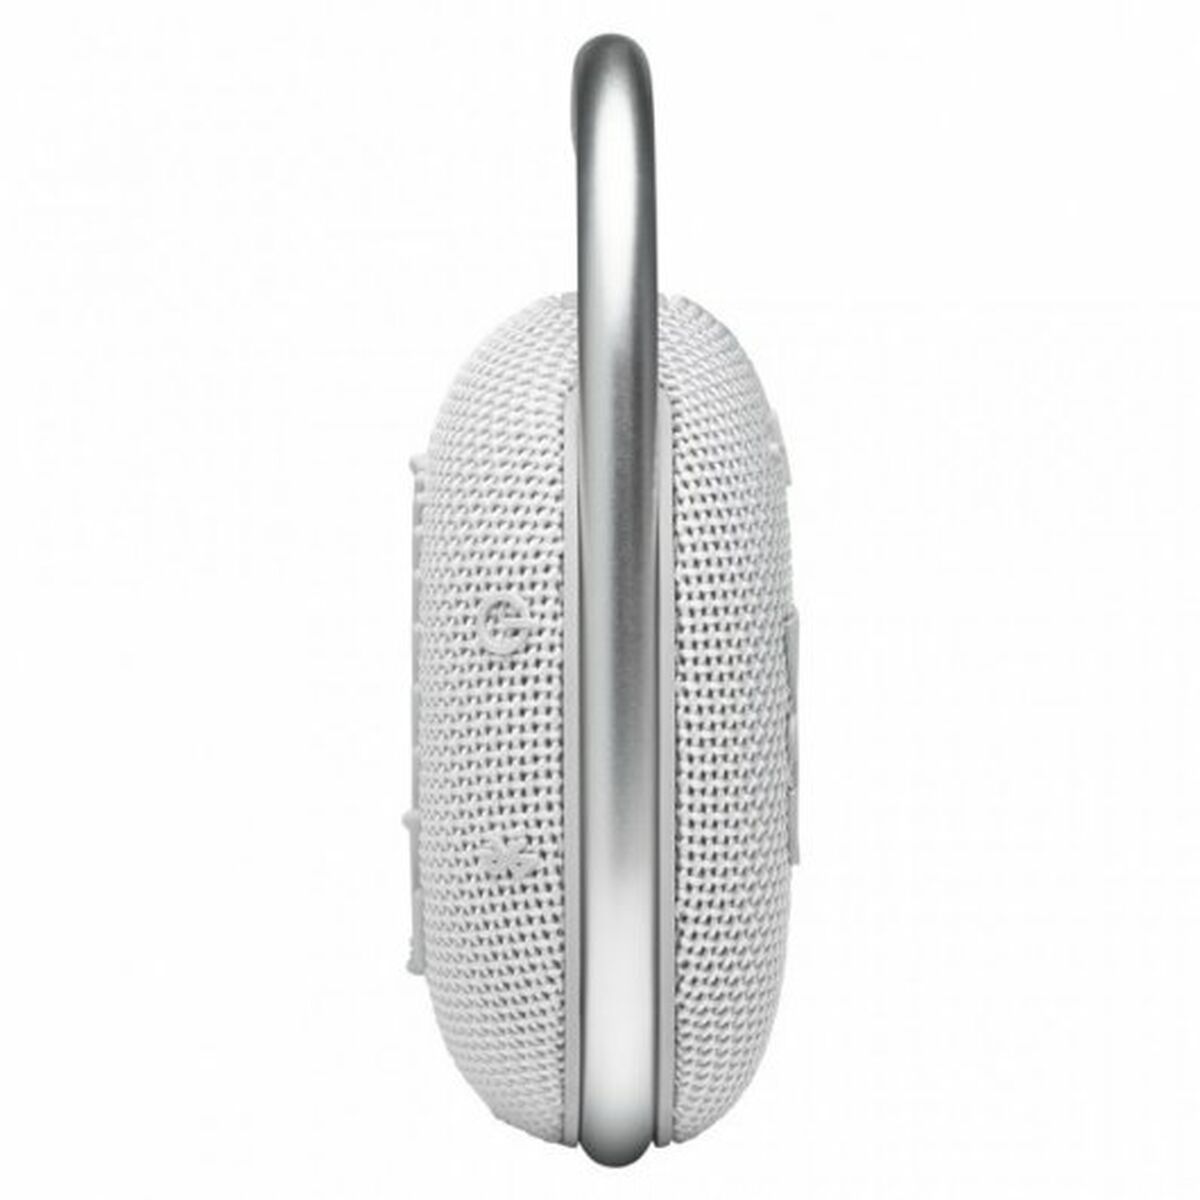 Kaufe Tragbare Bluetooth-Lautsprecher JBL Clip 4 Weiß 5 W bei AWK Flagship um € 96.00